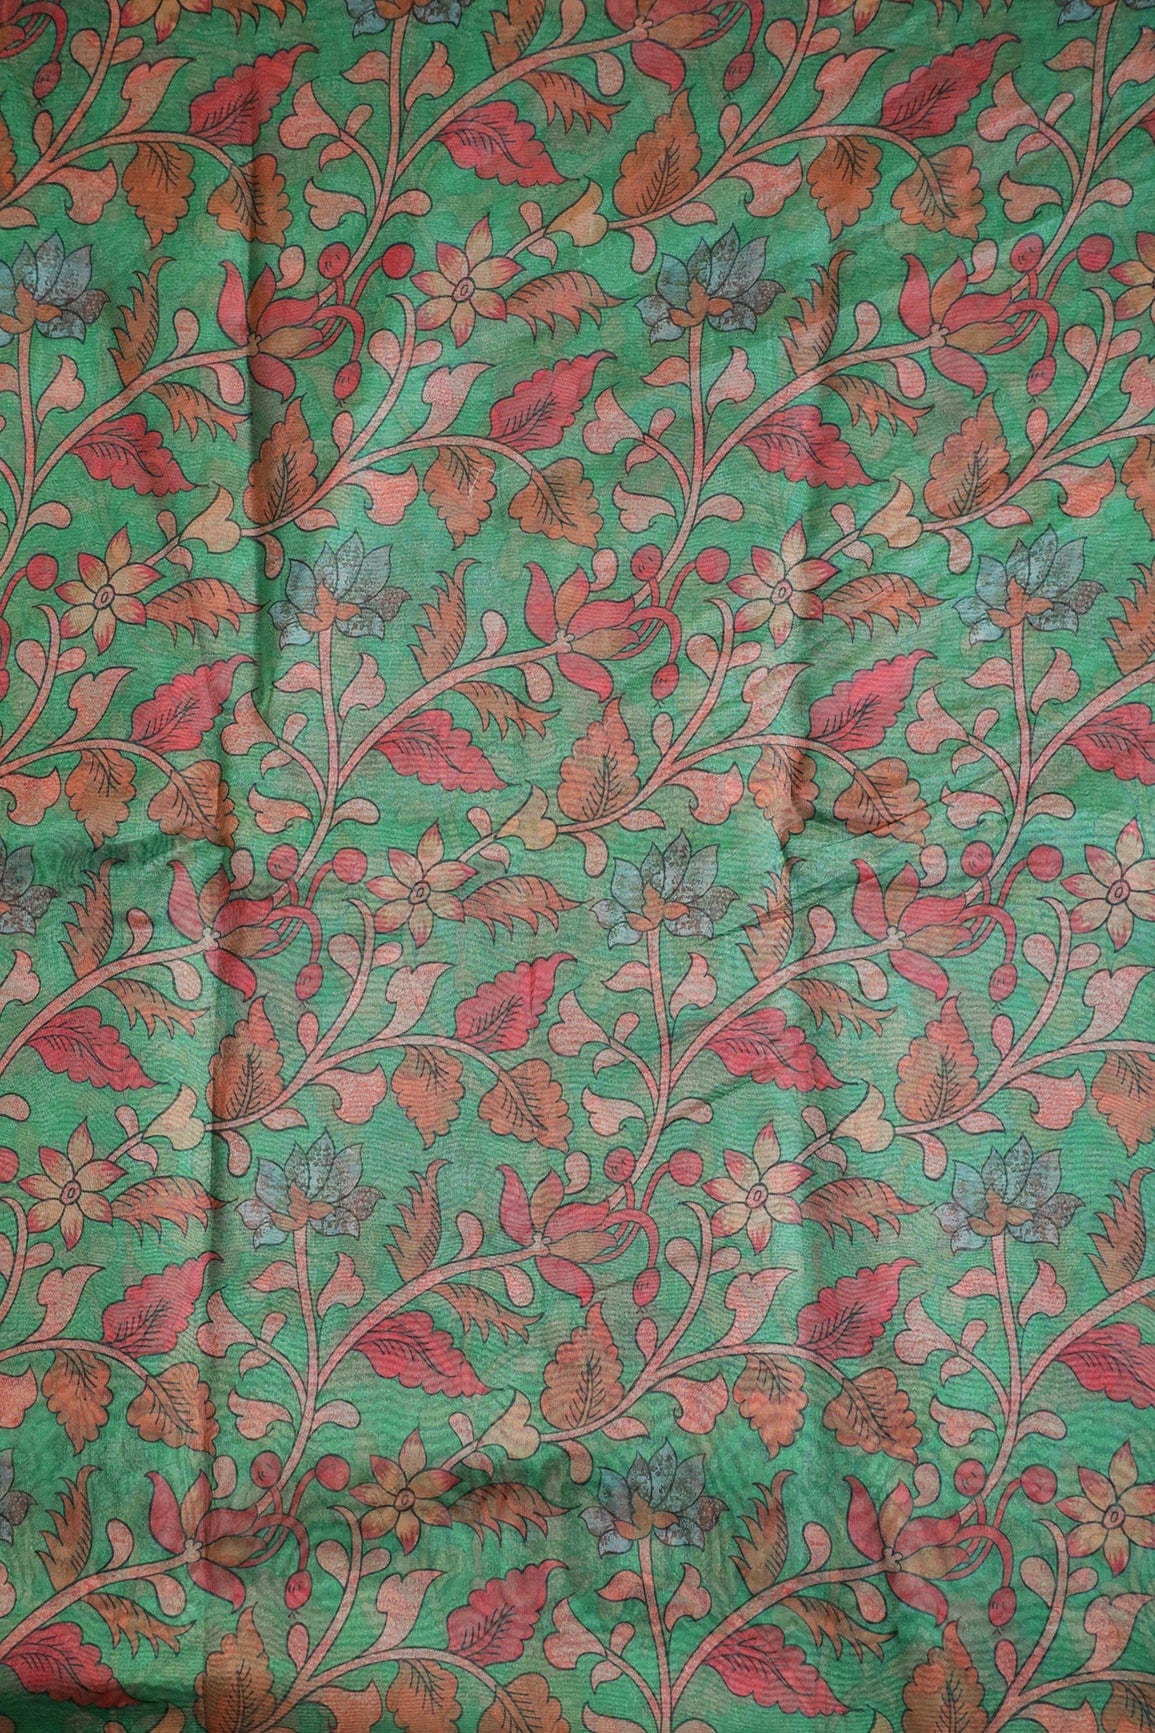 doeraa Prints Pink And Orange Floral Digital Print On Green Organza Fabric